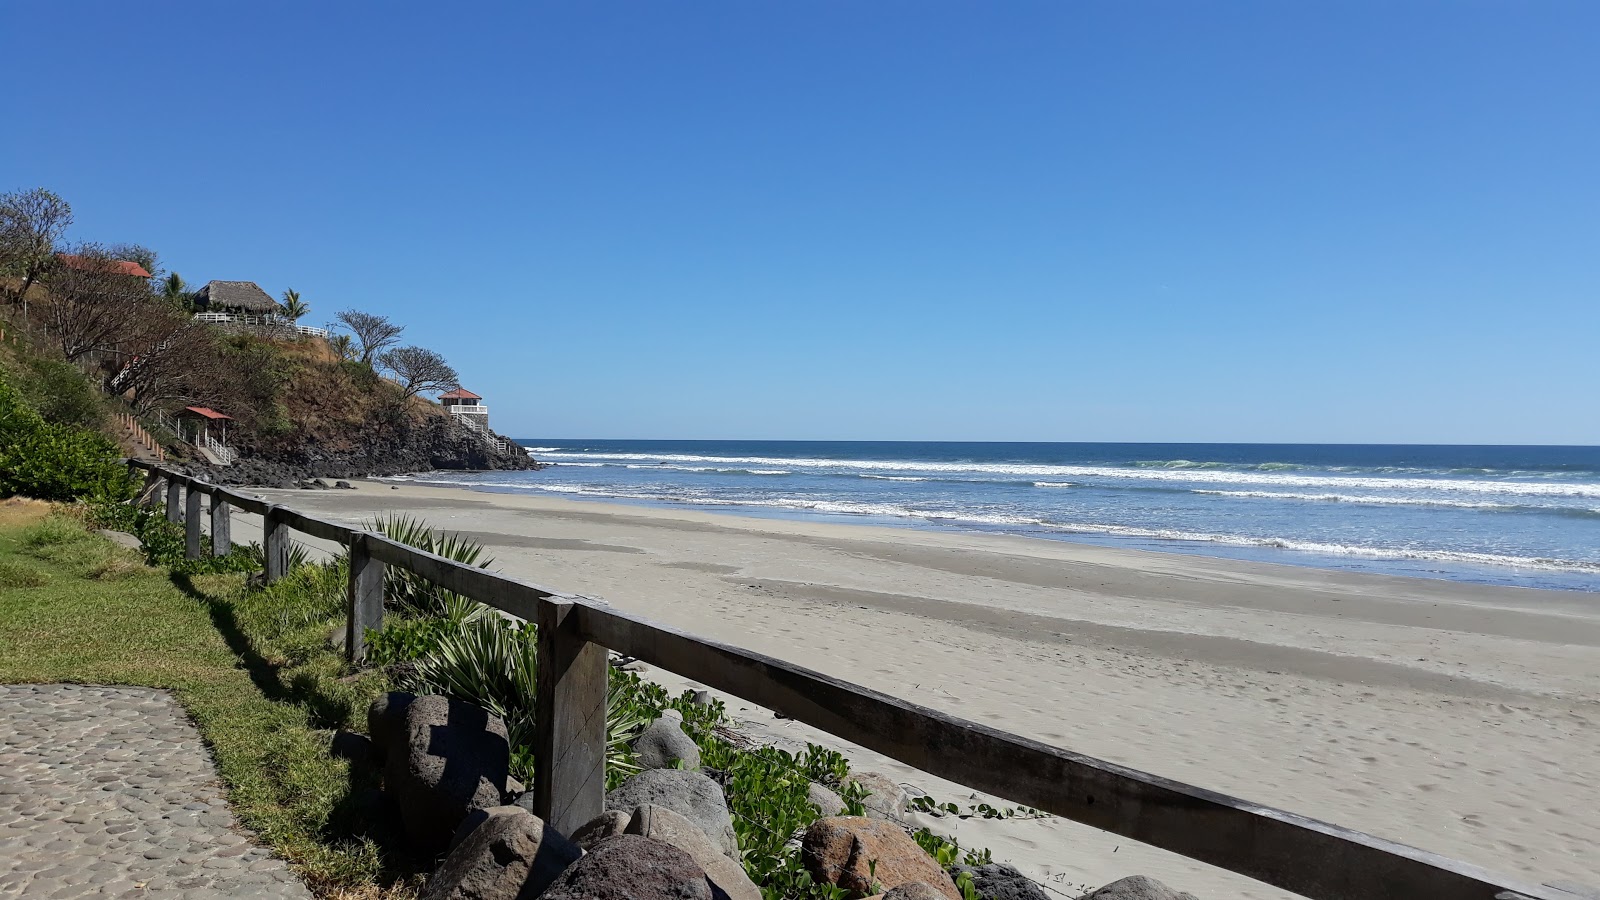 Foto de El Carrizal beach - lugar popular entre os apreciadores de relaxamento